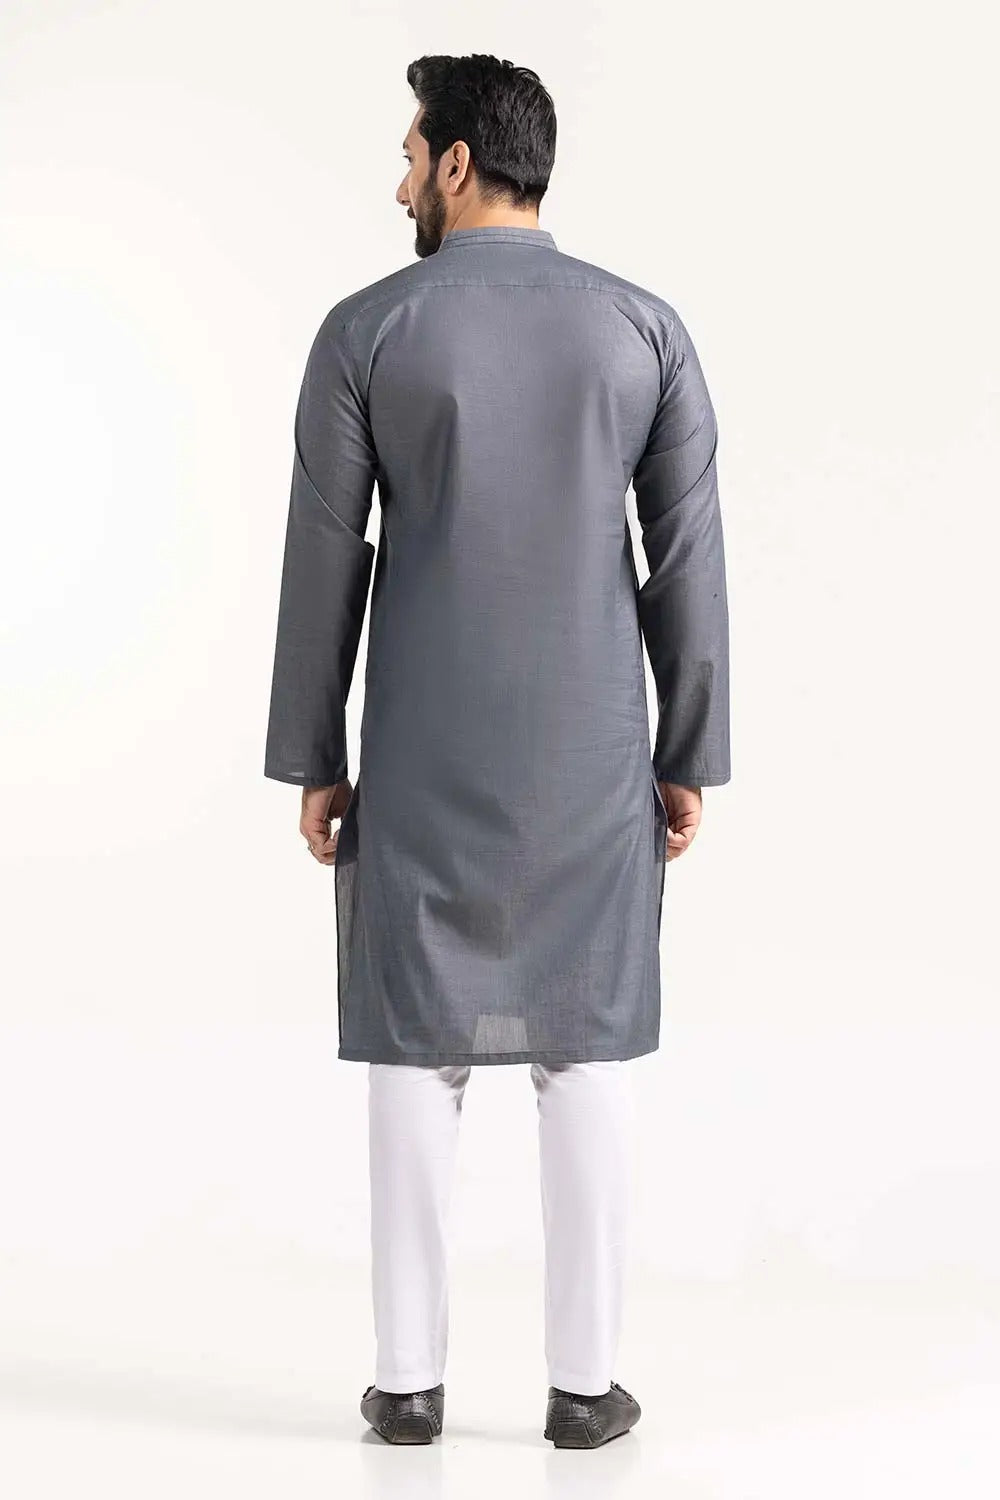 Gul Ahmed Ready to Wear Grey Fashion Kurta - KS-897